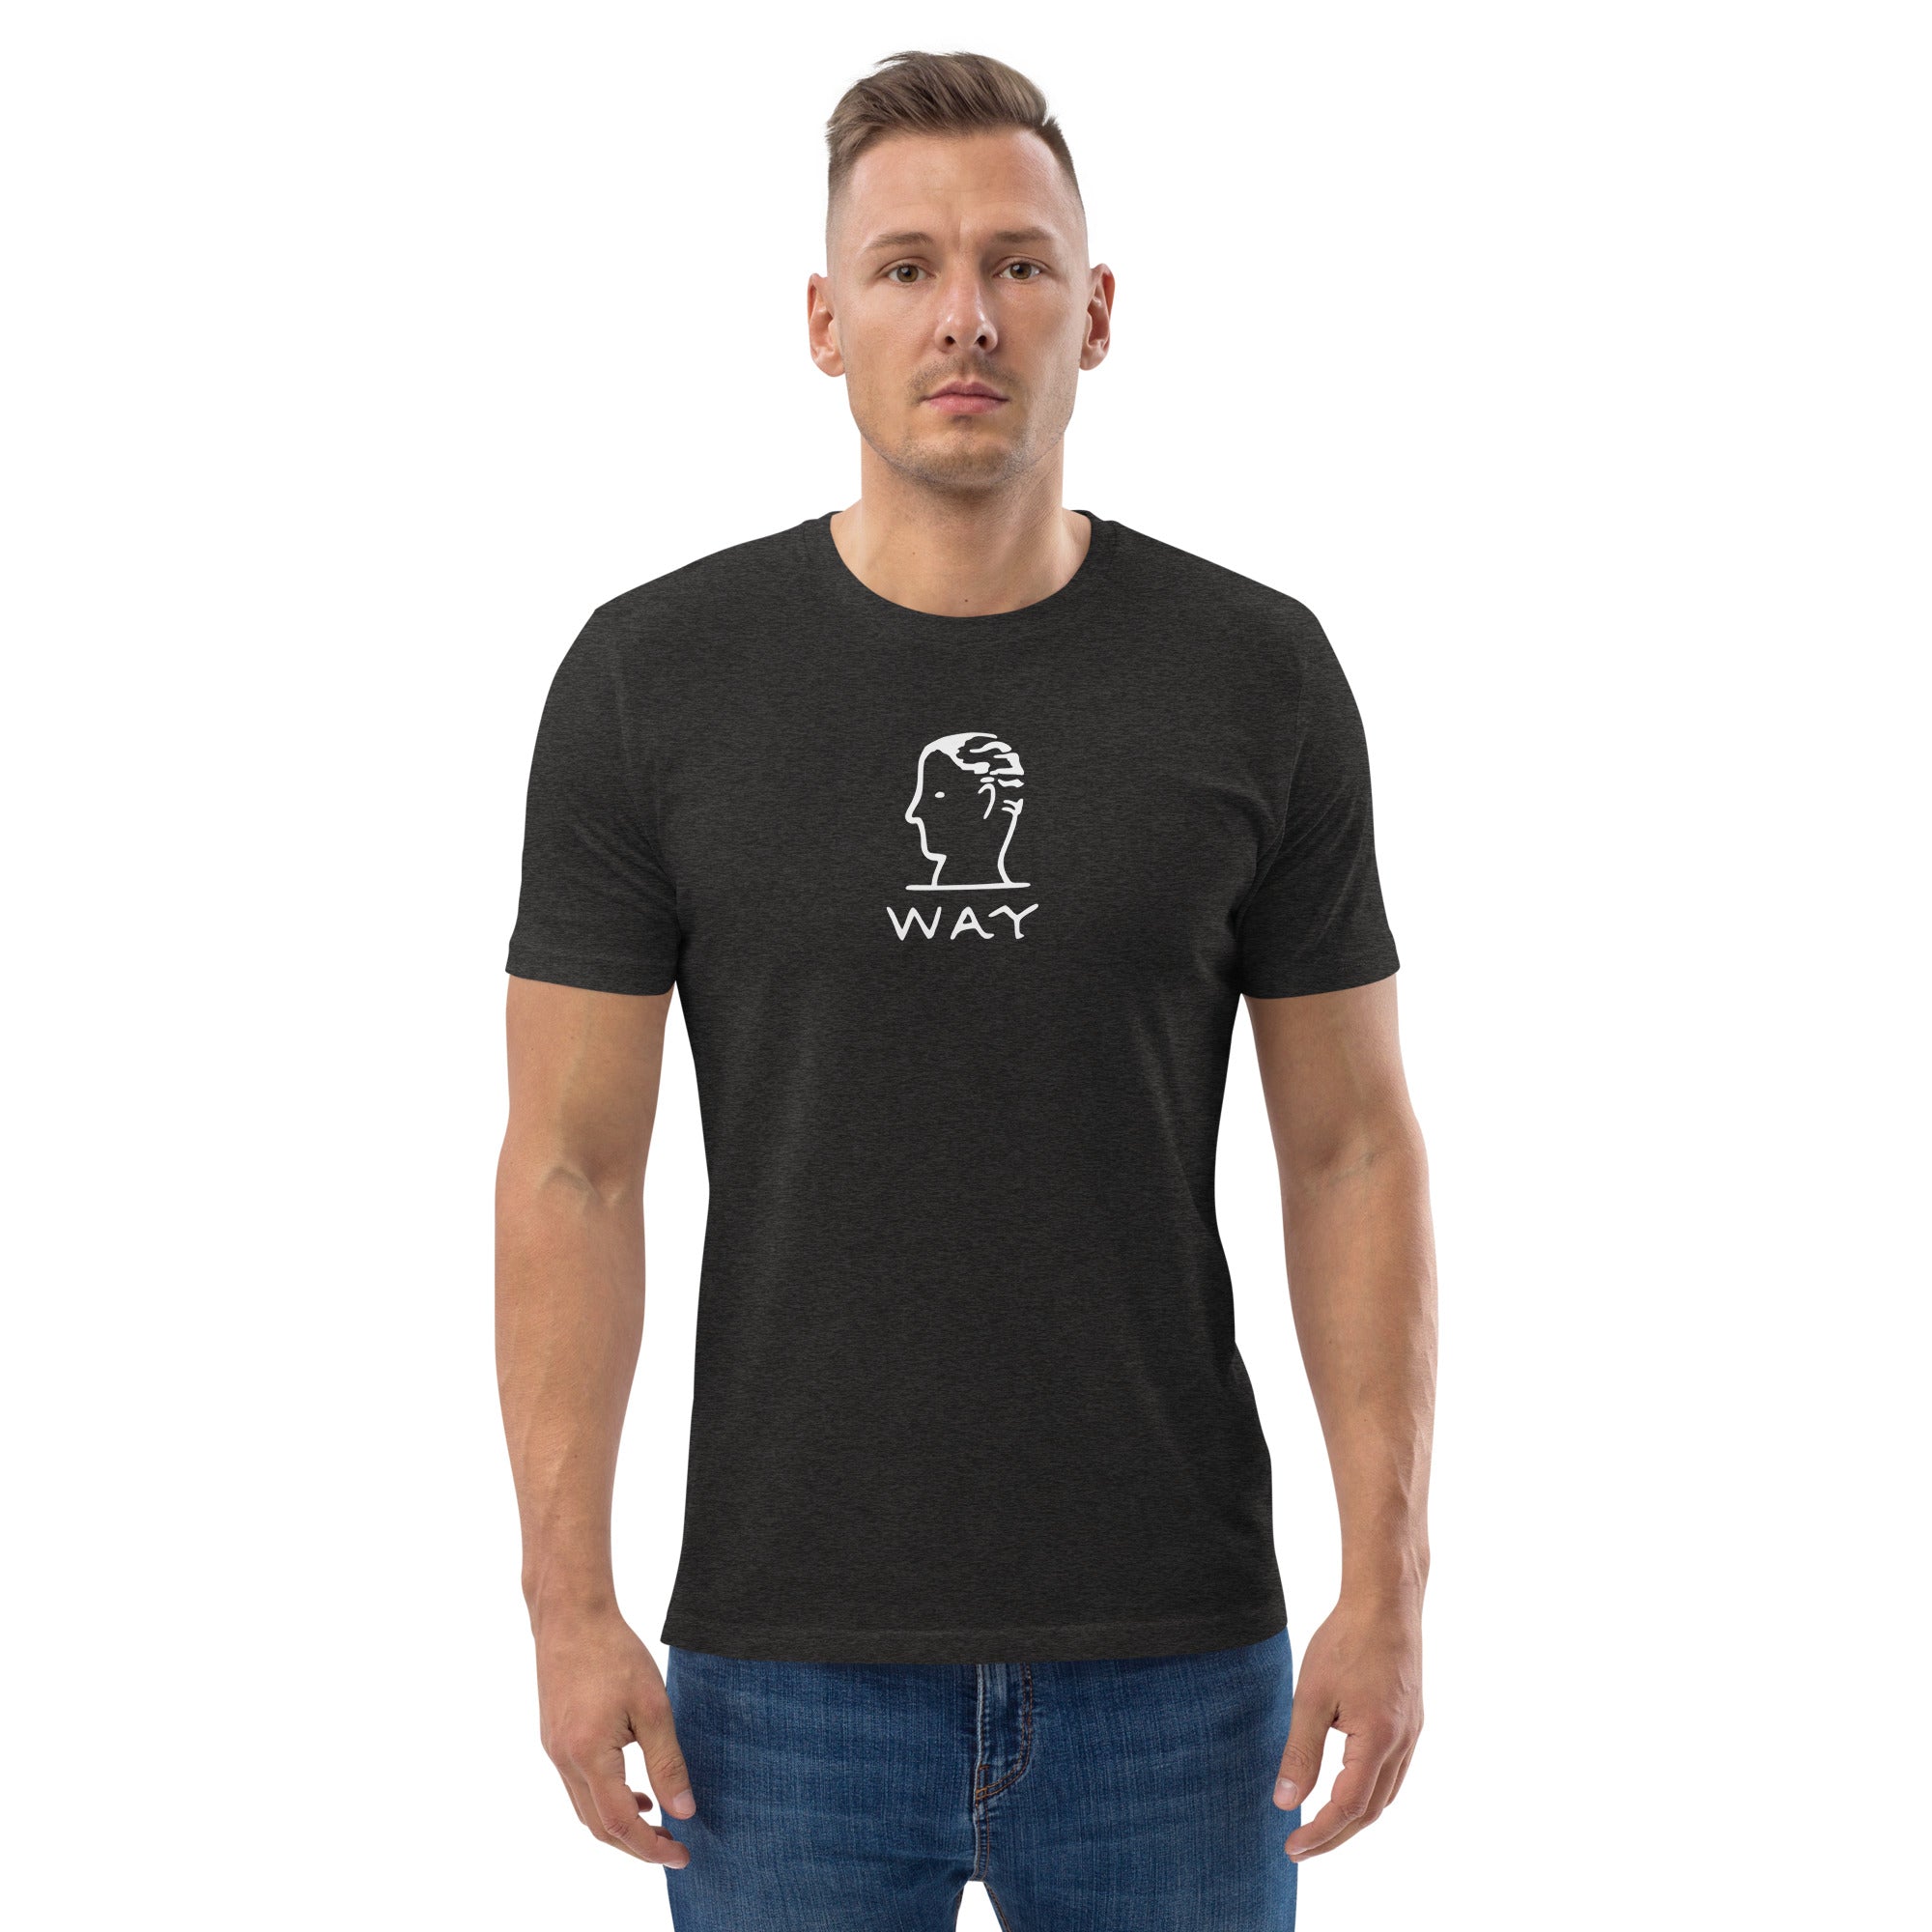 Way Unisex organic cotton t-shirt